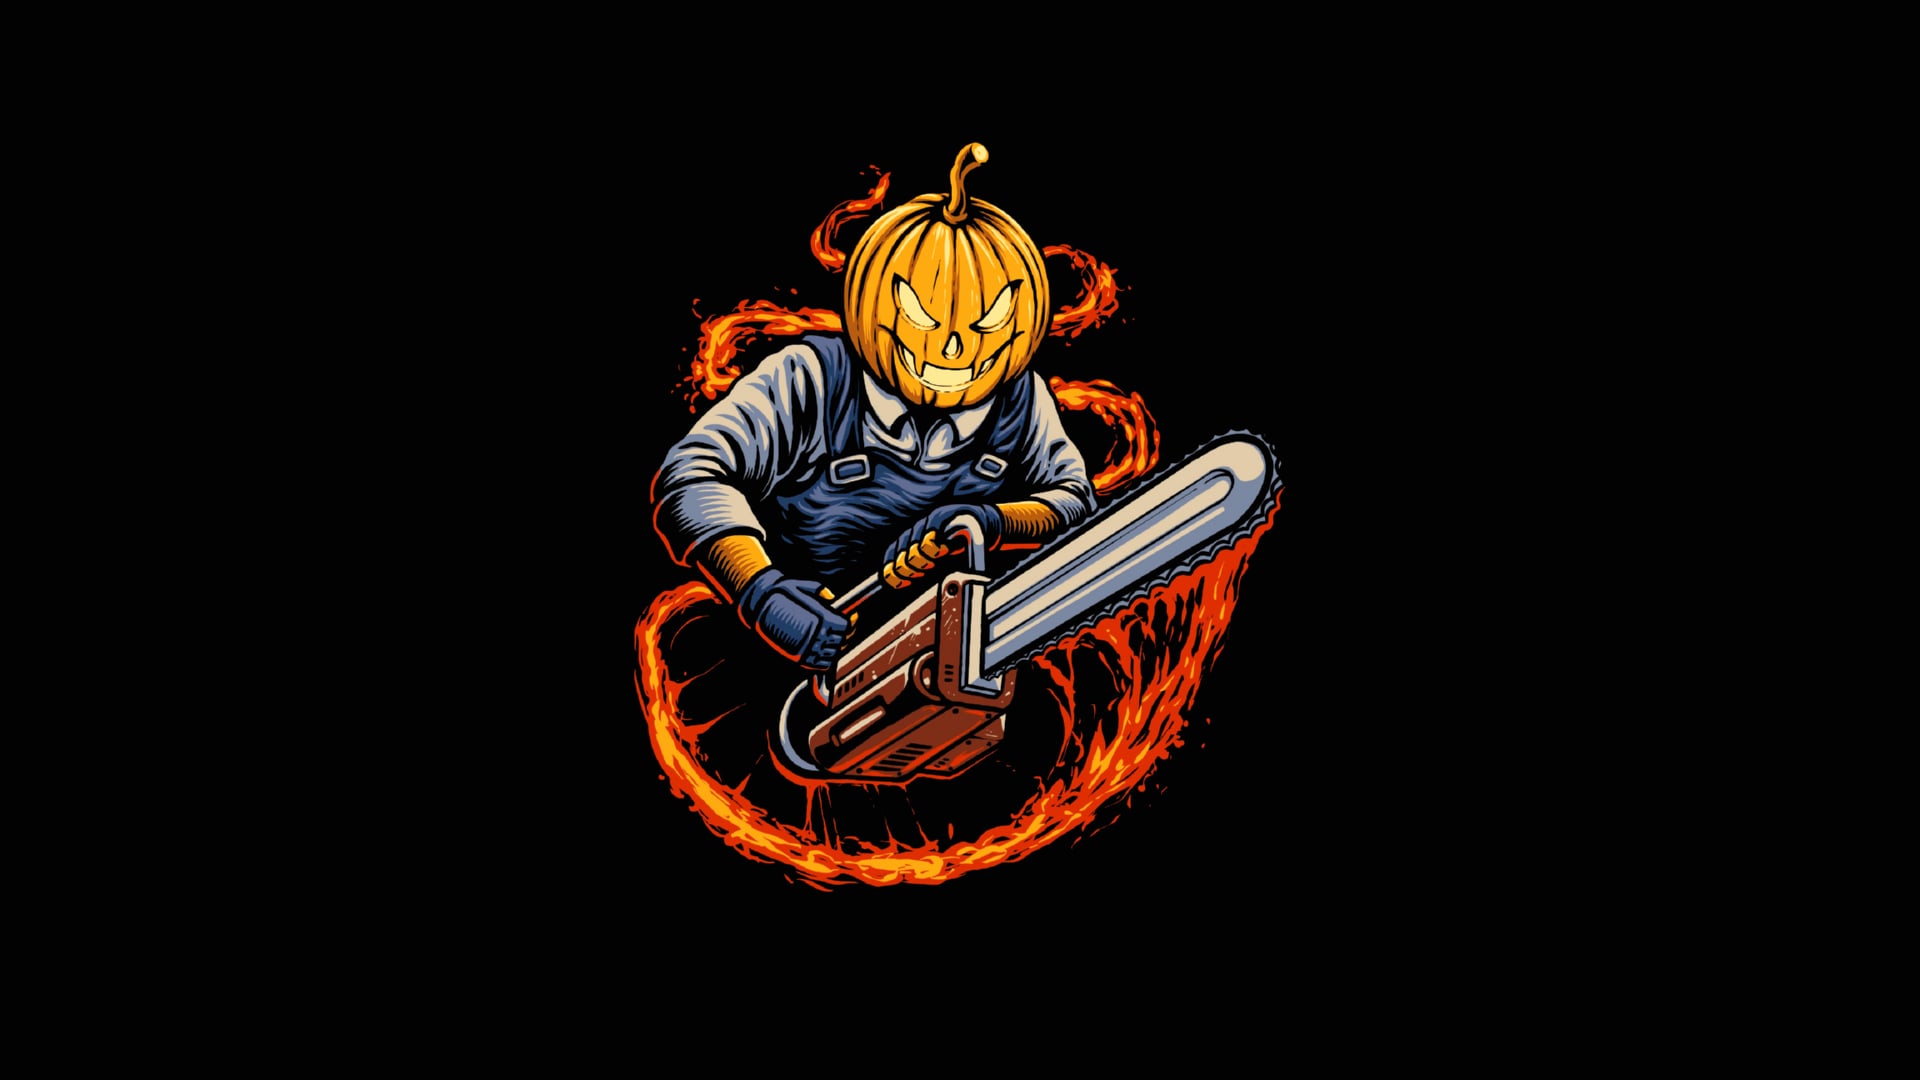 Digital Art Halloween Pumpkin at 640 x 960 iPhone 4 size wallpapers HD quality